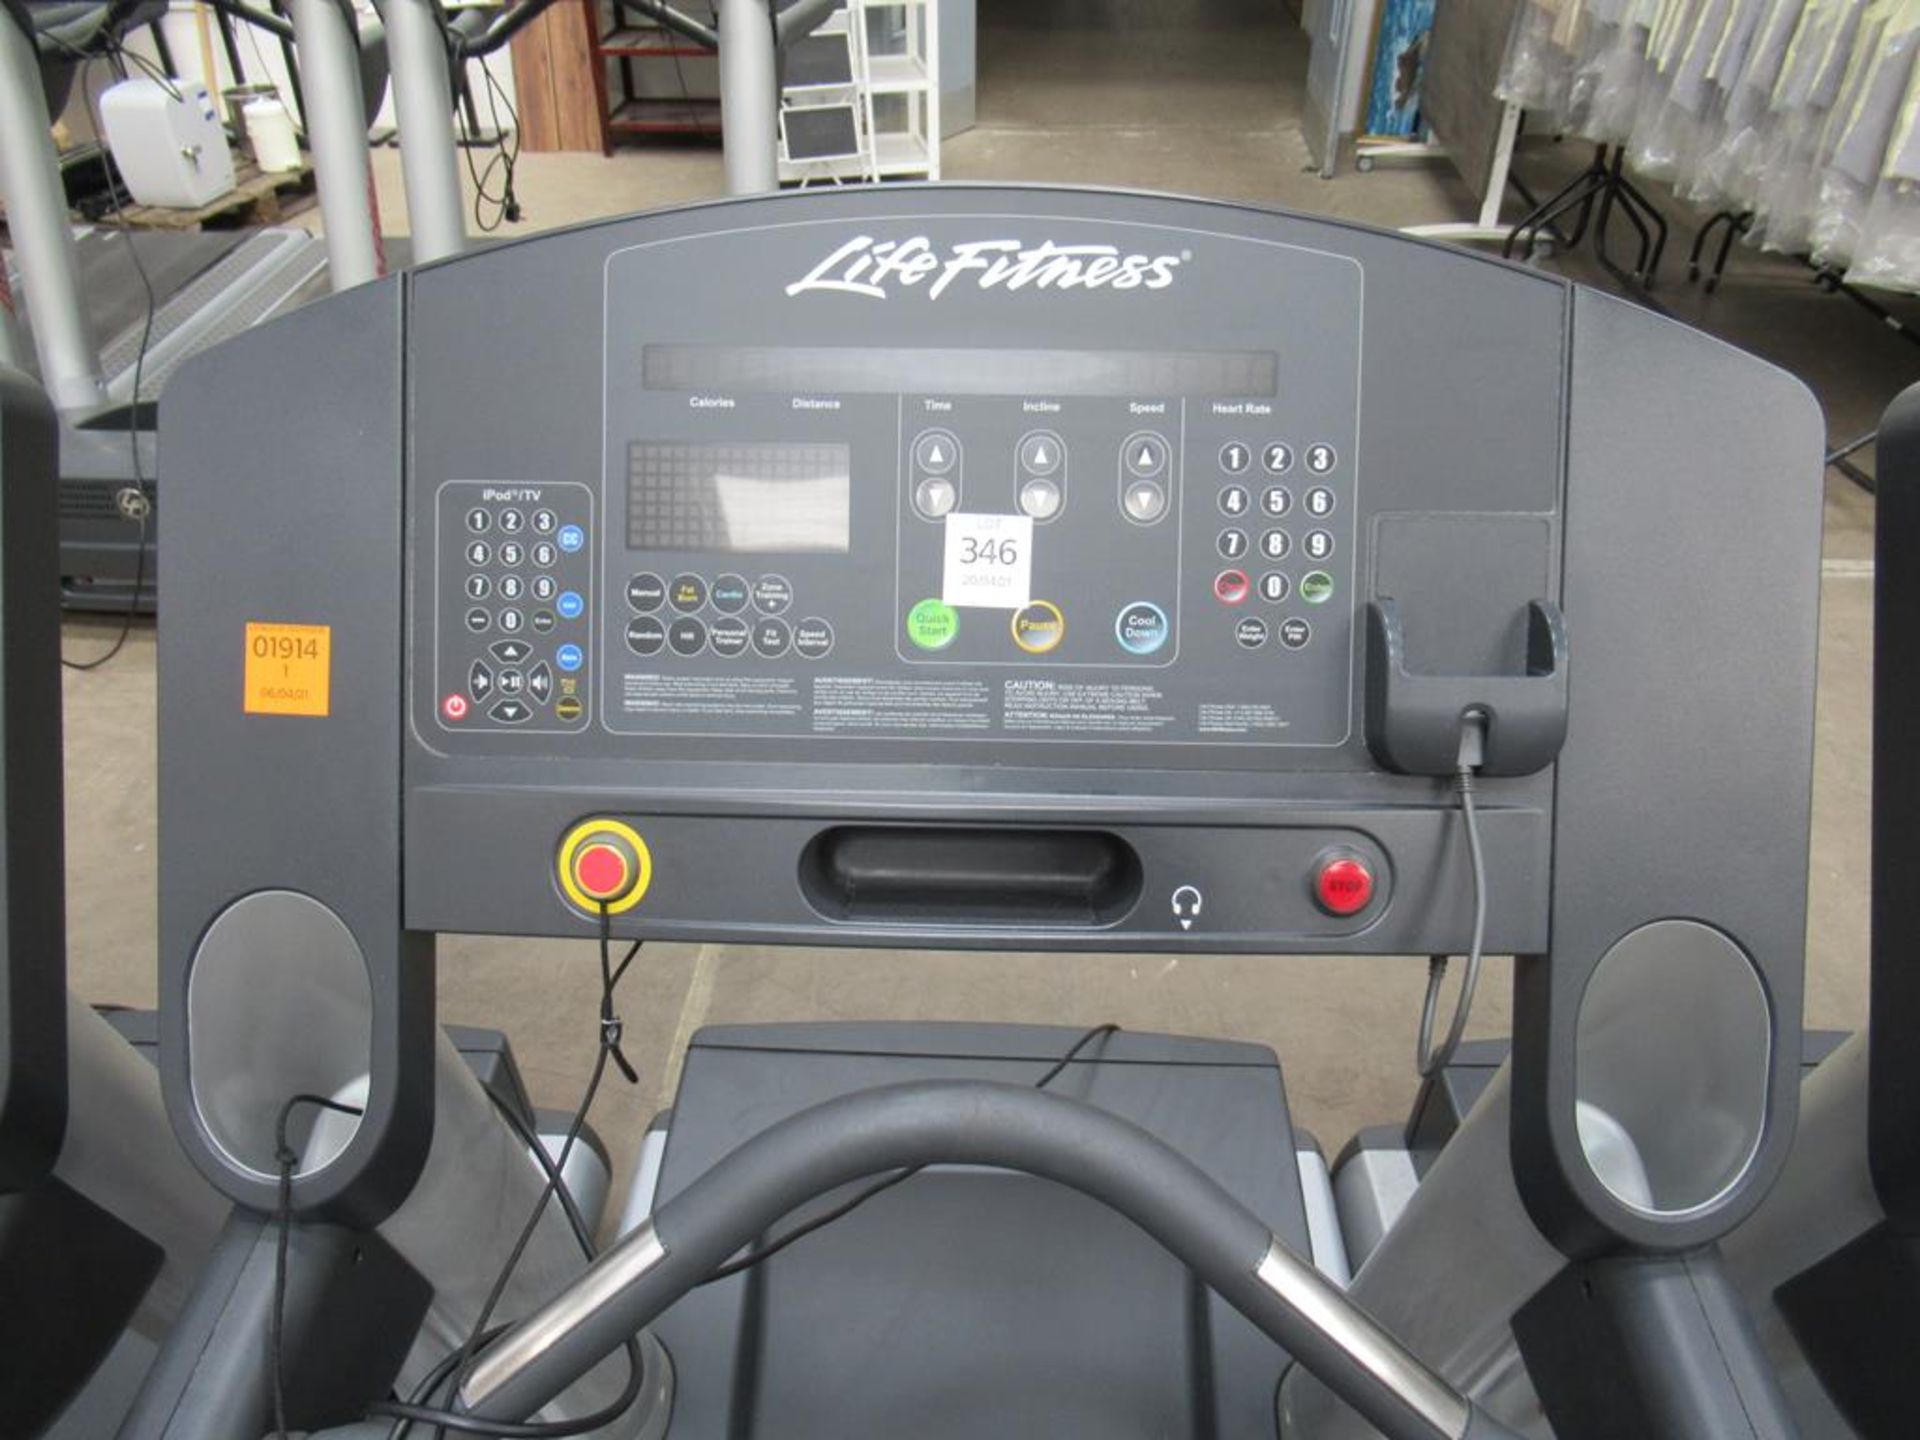 Life Fitness Flexdeck Treadmill - Image 2 of 2